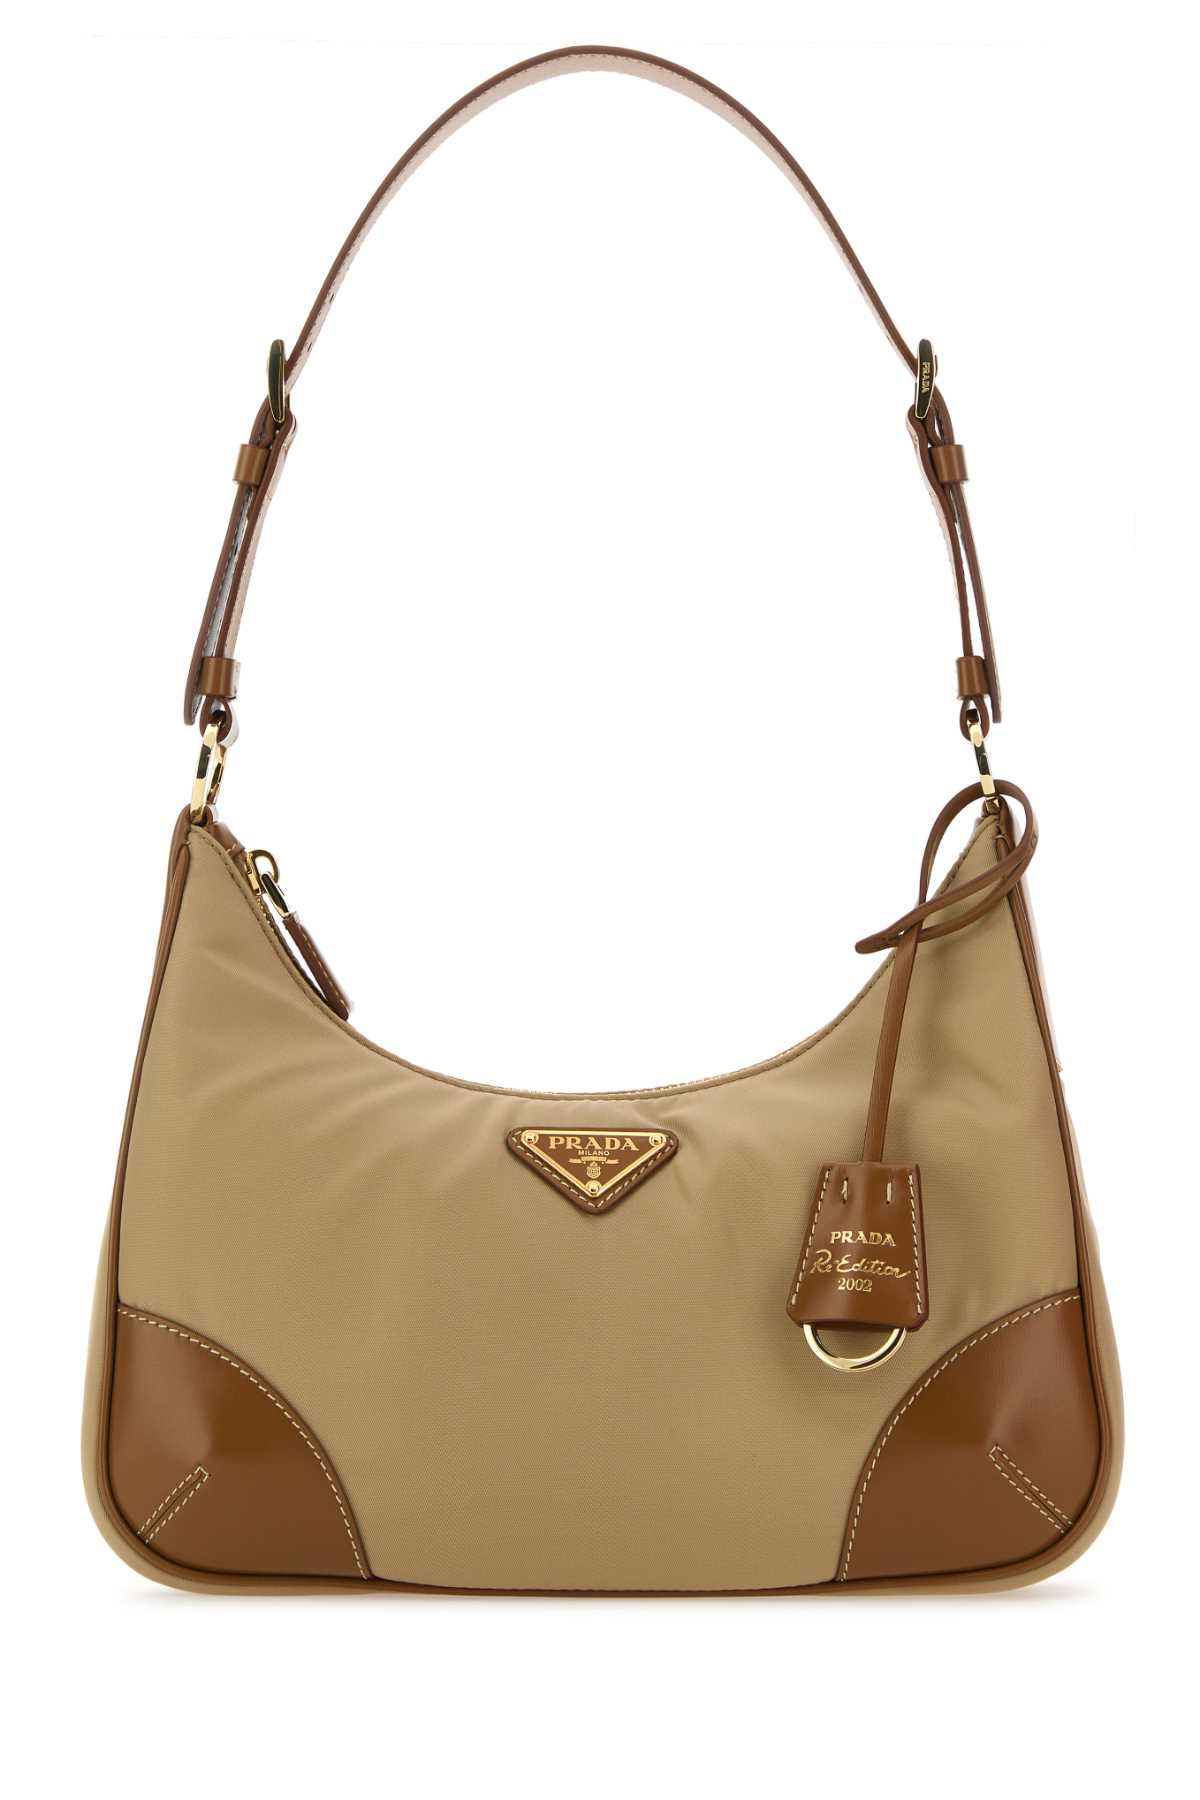 Prada Camel Re-nylon Re-edition 2002 Shoulder Bag